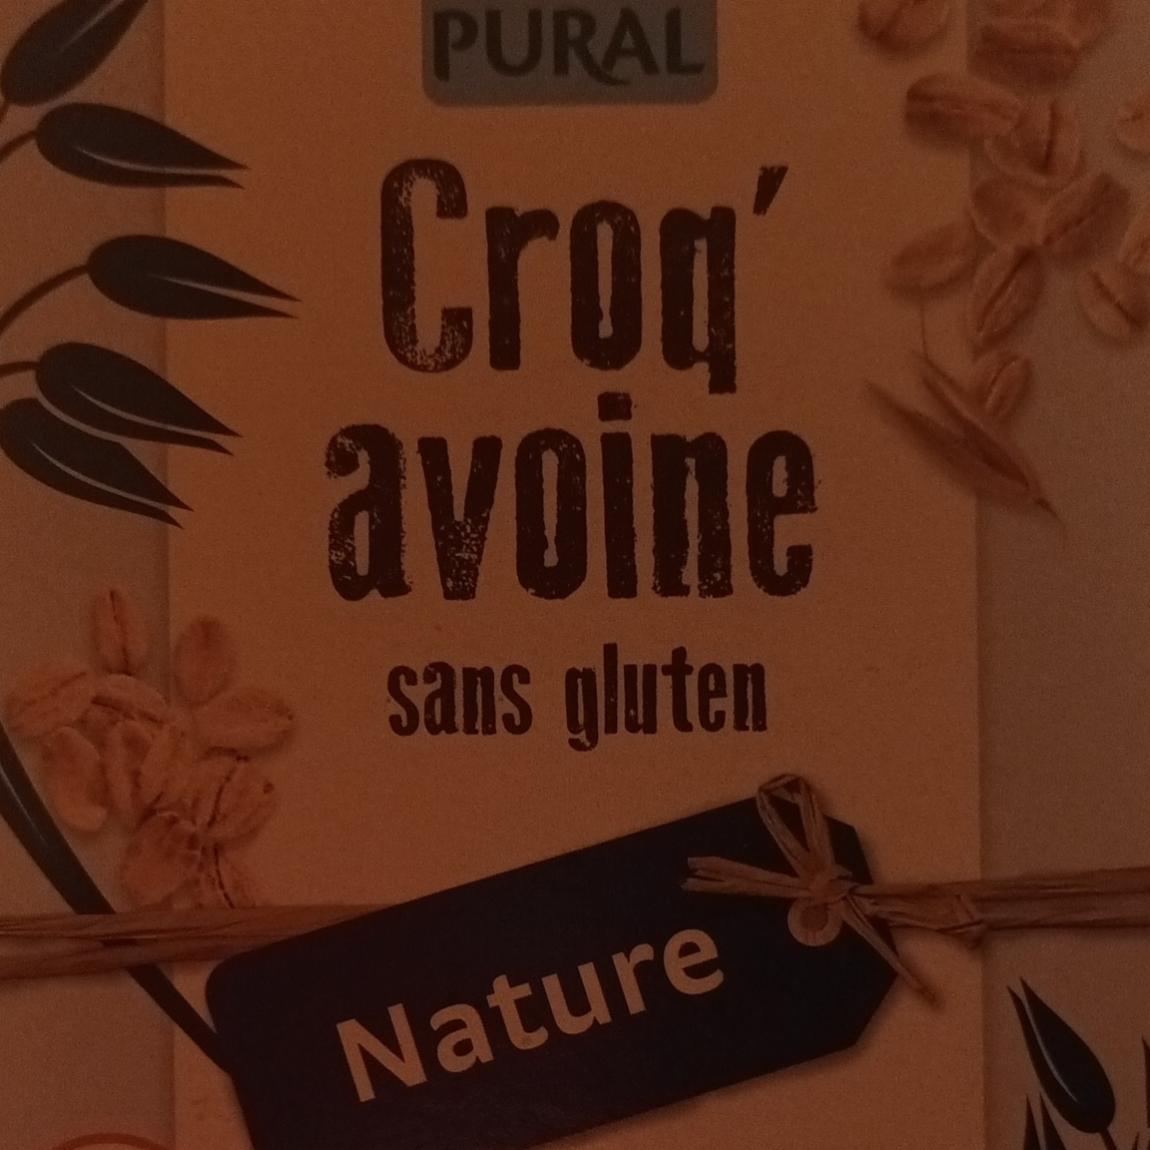 Fotografie - Croq' avoine sans gluten Nature Pural